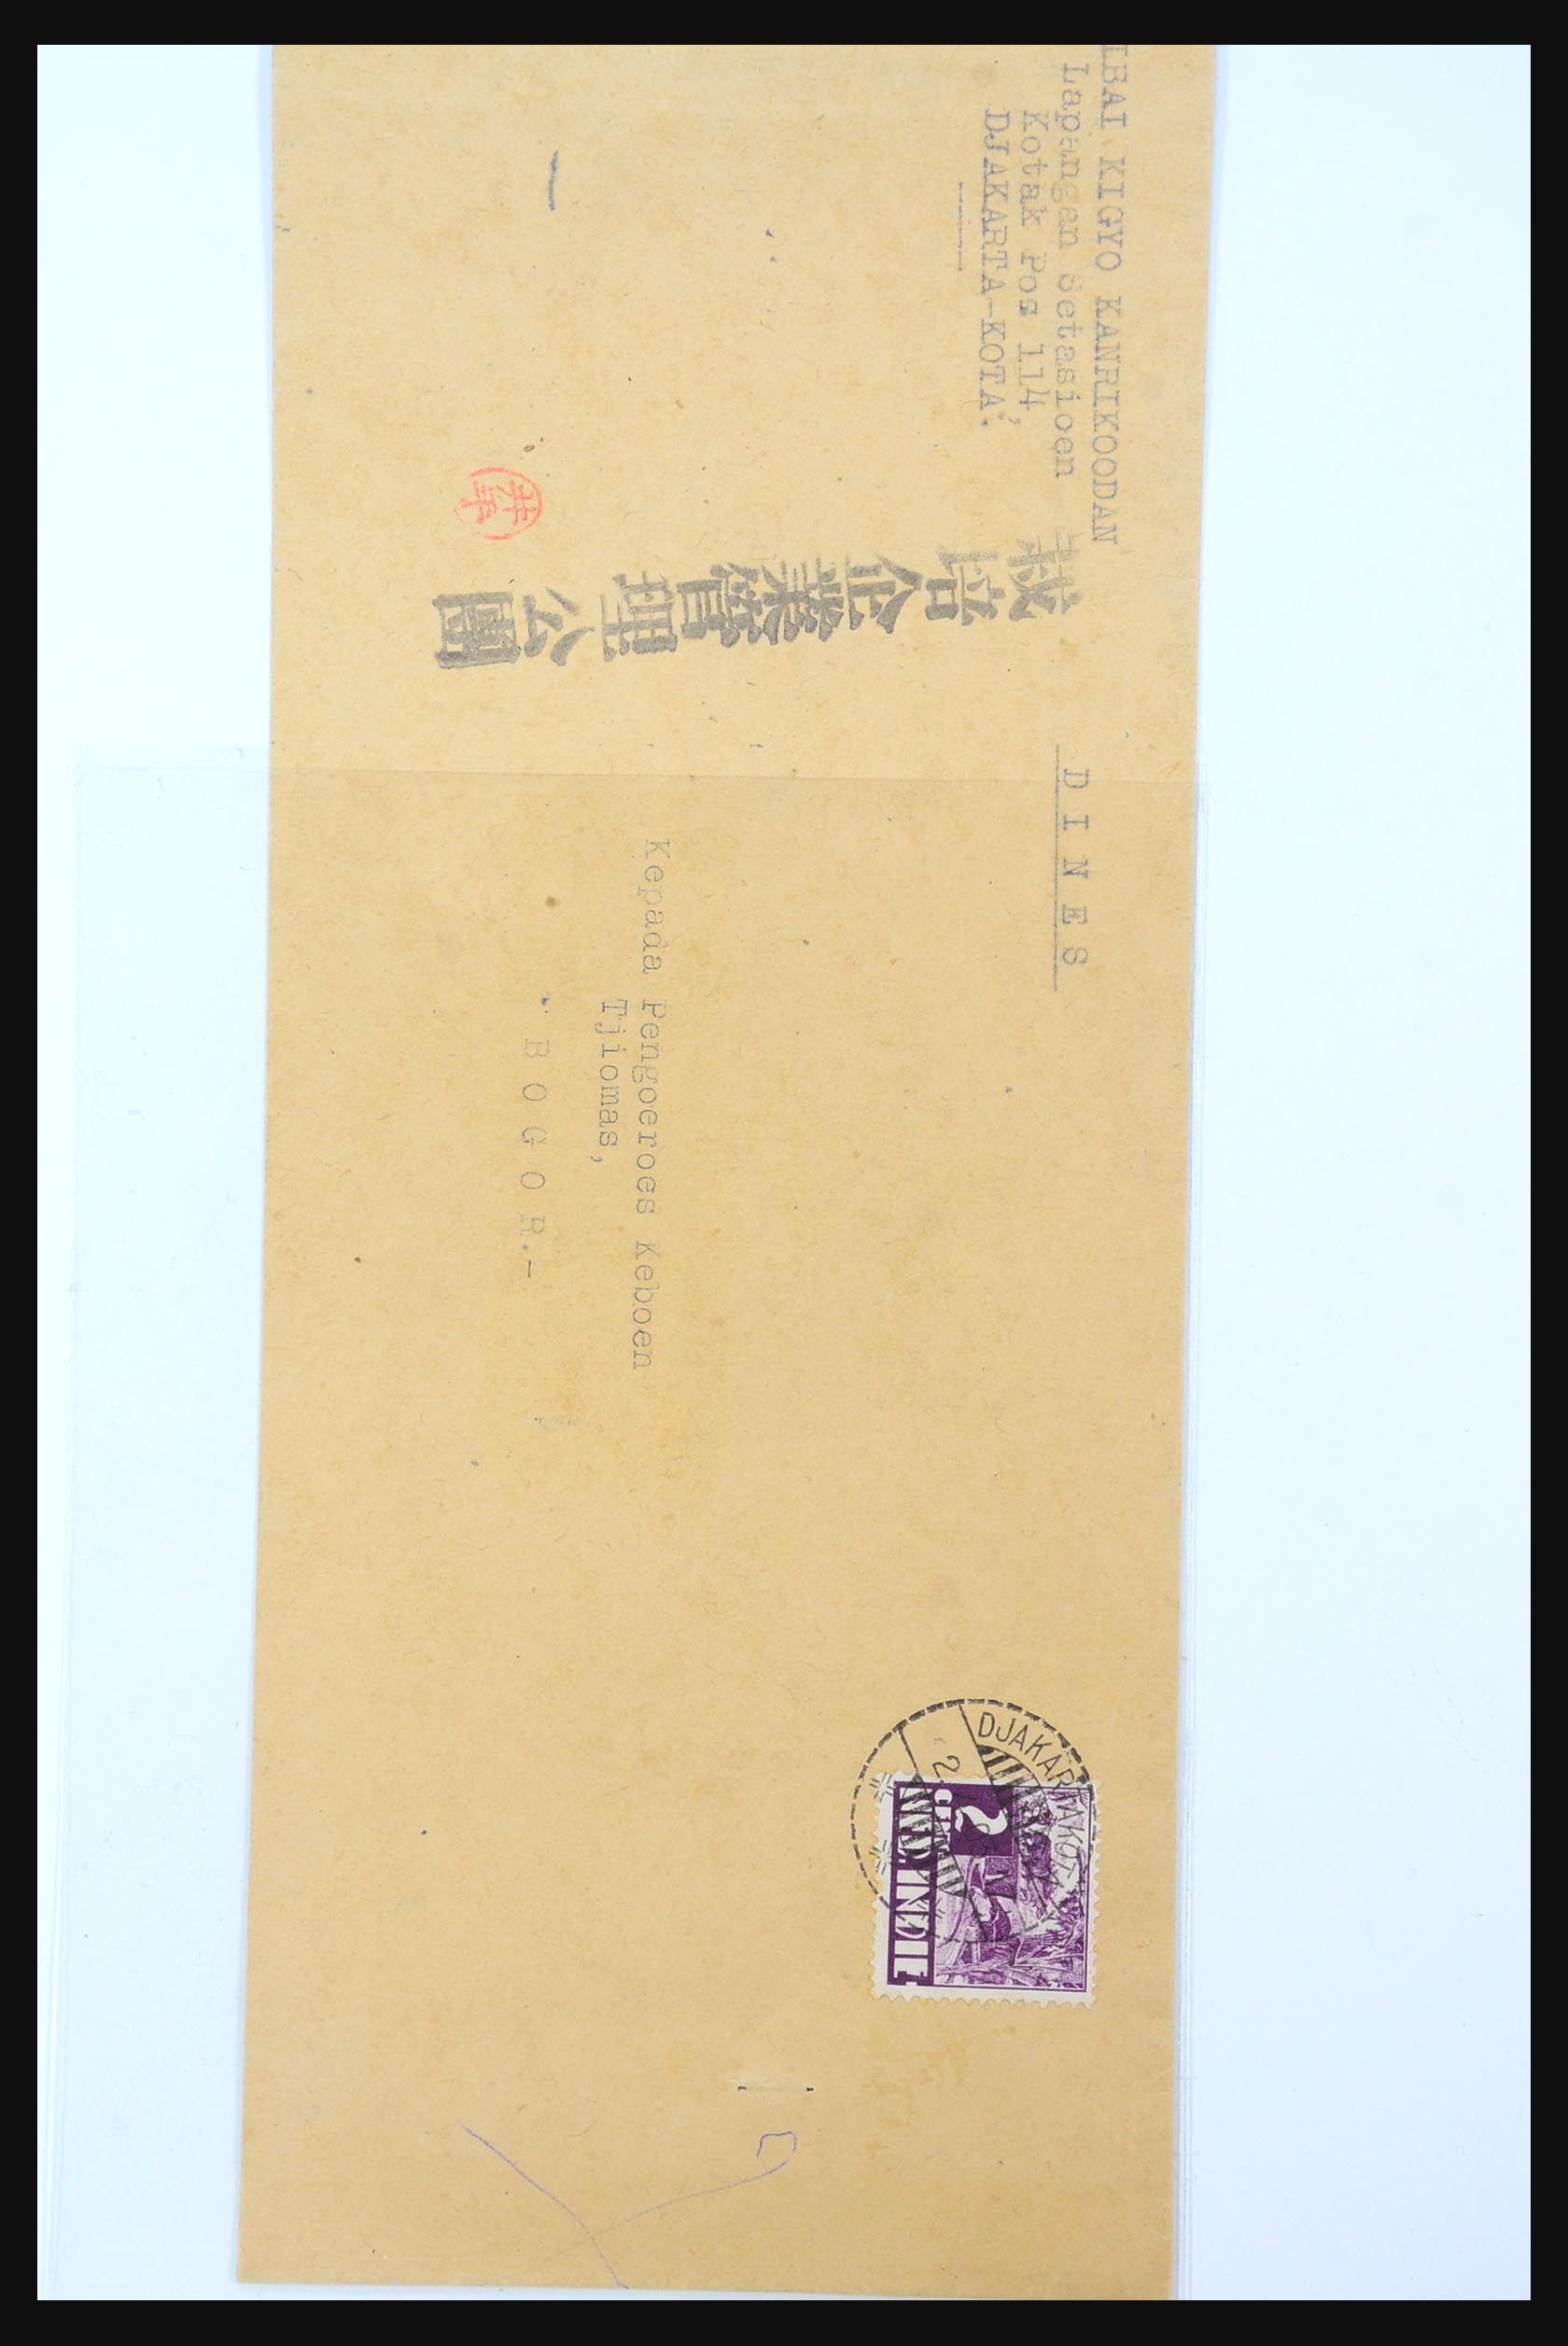 31362 066 - 31362 Nederlands Indië Japanse bezetting brieven 1942-1945.